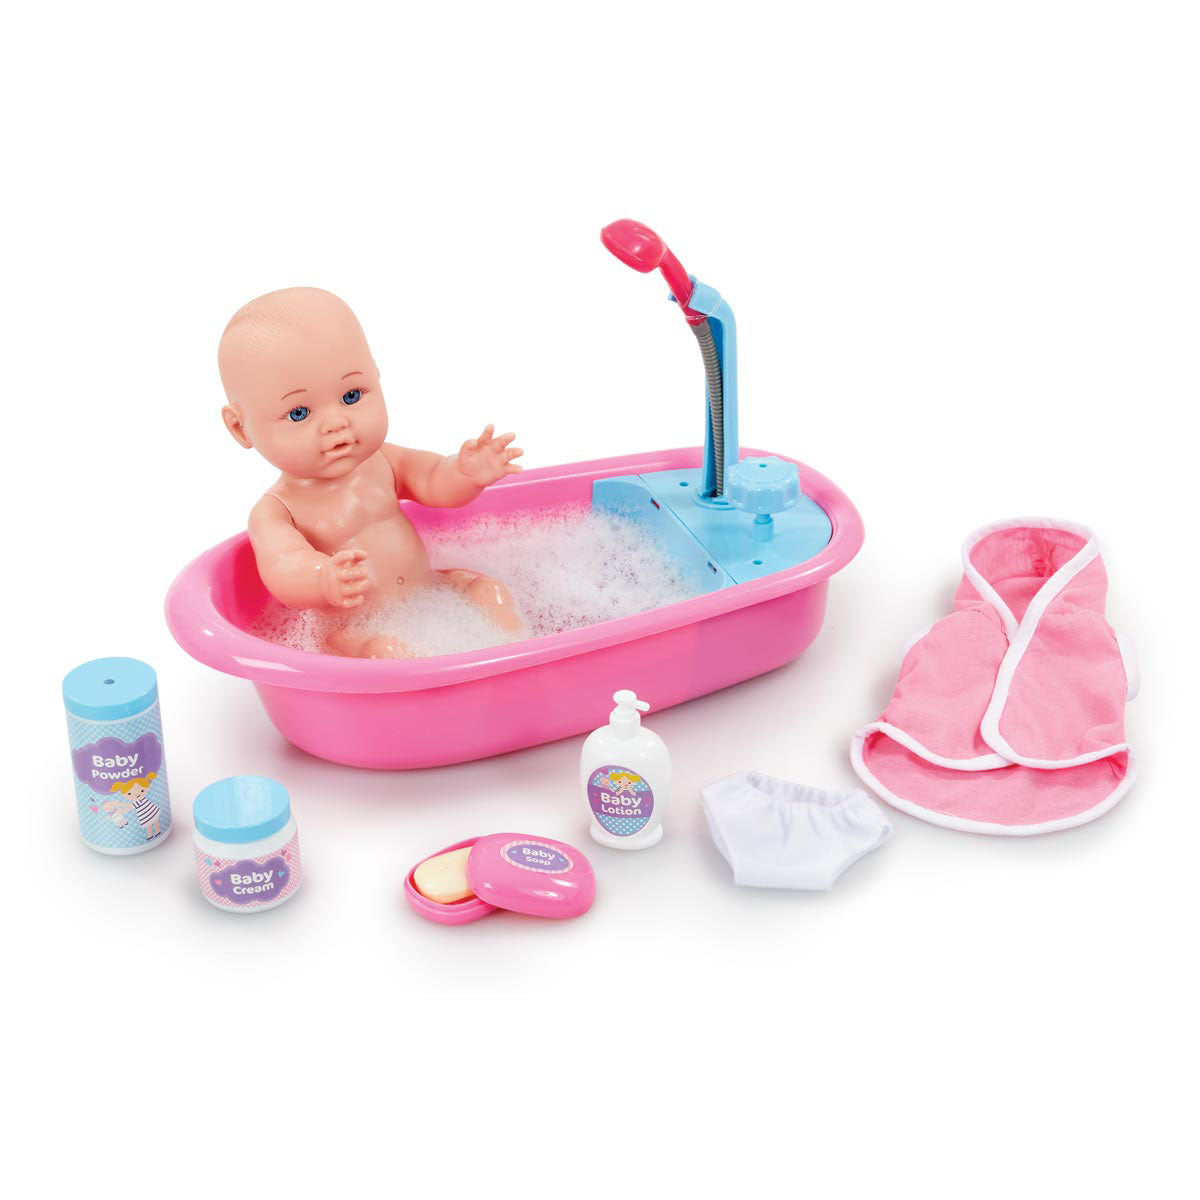 Be My Baby Bathtime Playset